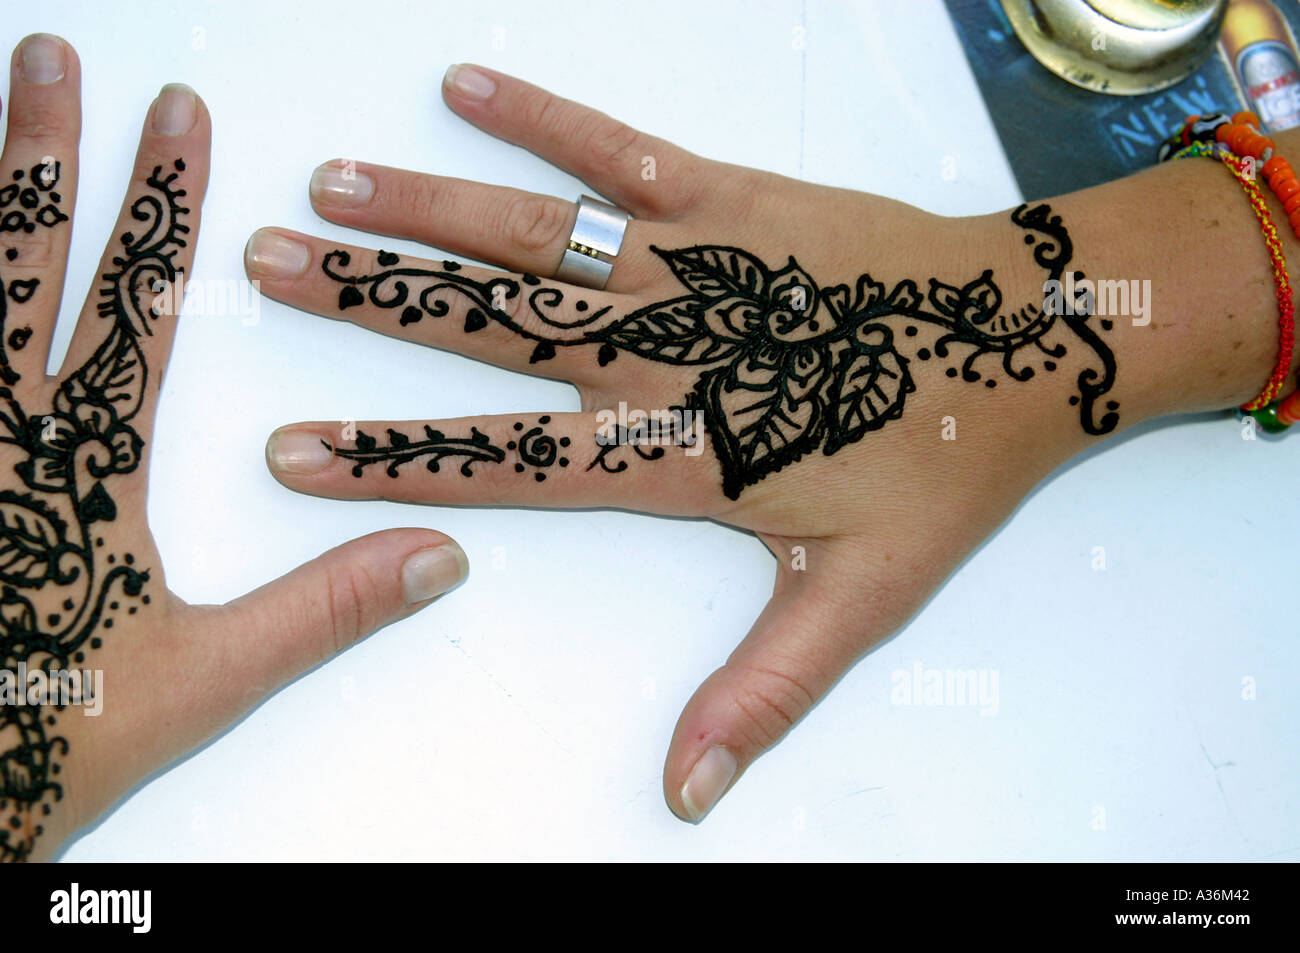 moon hand henna | Hand henna, Cute henna tattoos, Henna designs